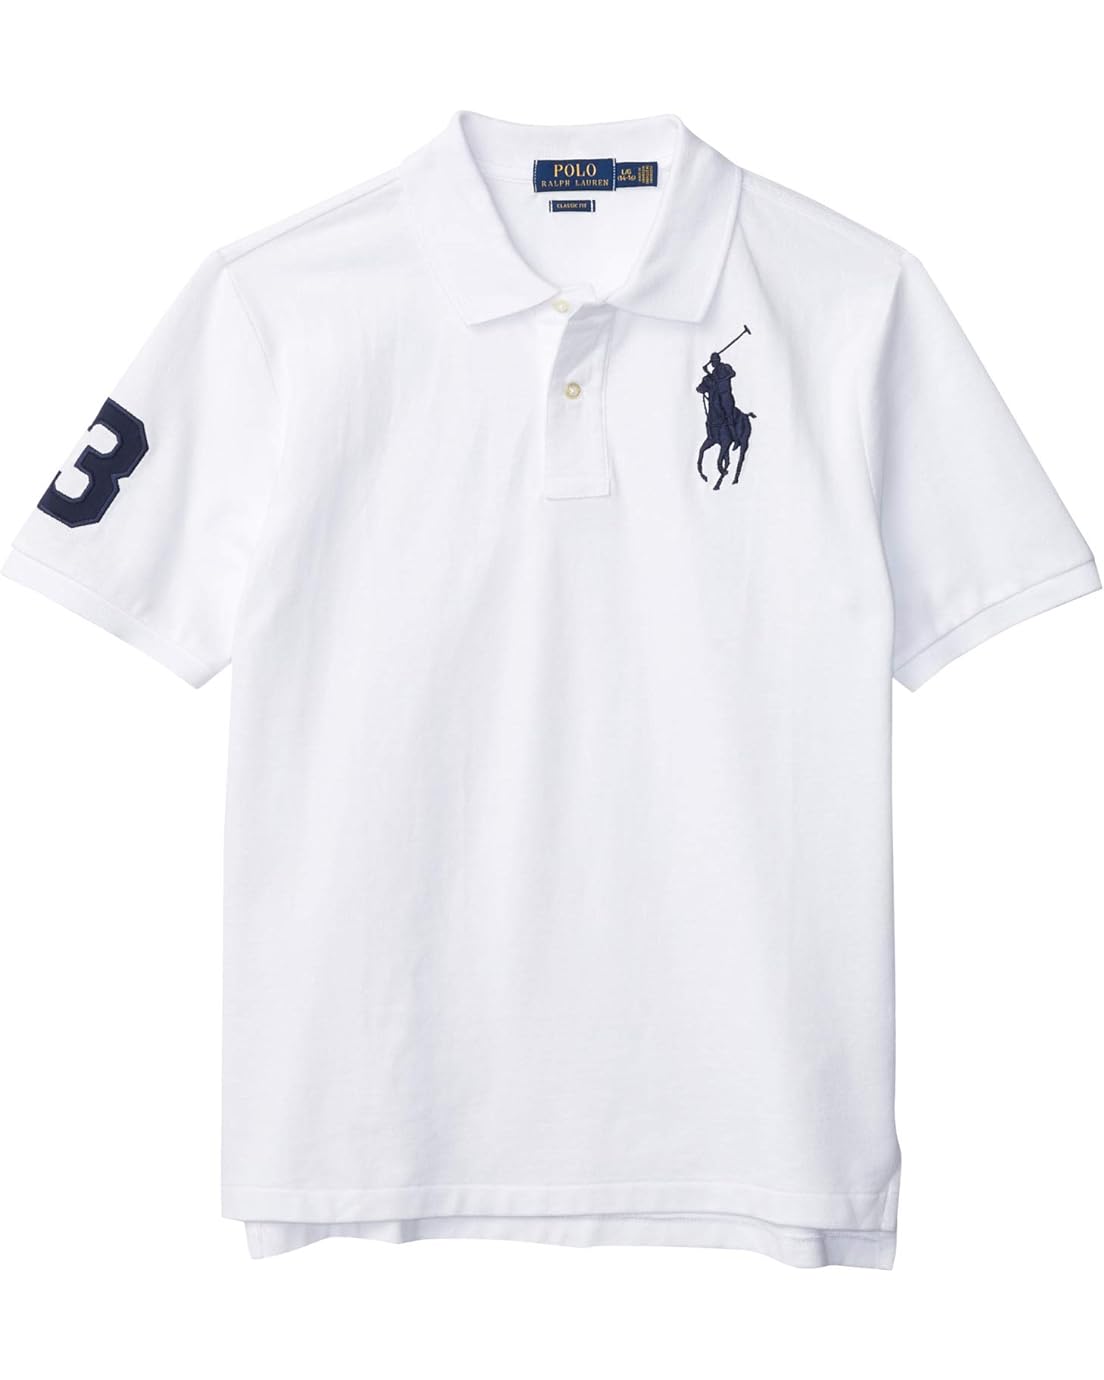 Polo Ralph Lauren Kids Big Pony Cotton Mesh Polo Shirt (Big Kids)